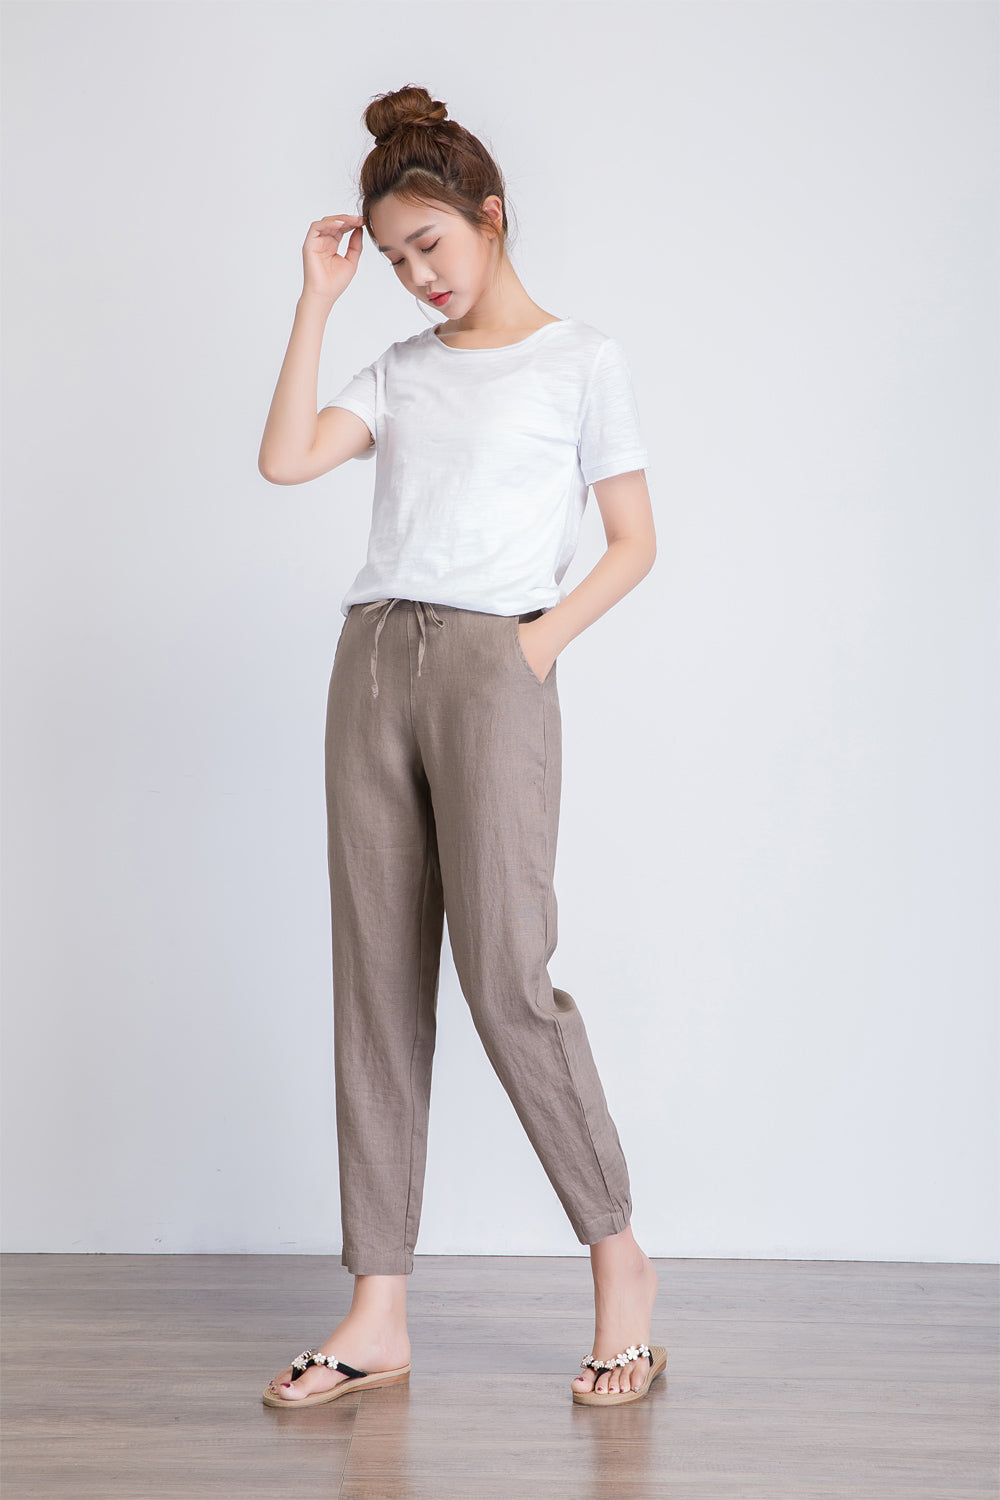 Milumia Women's Mid Waist Plaid Print Cropped Pants Vintage Tartan Trousers  Grey Small at Amazon Women's Clothing store